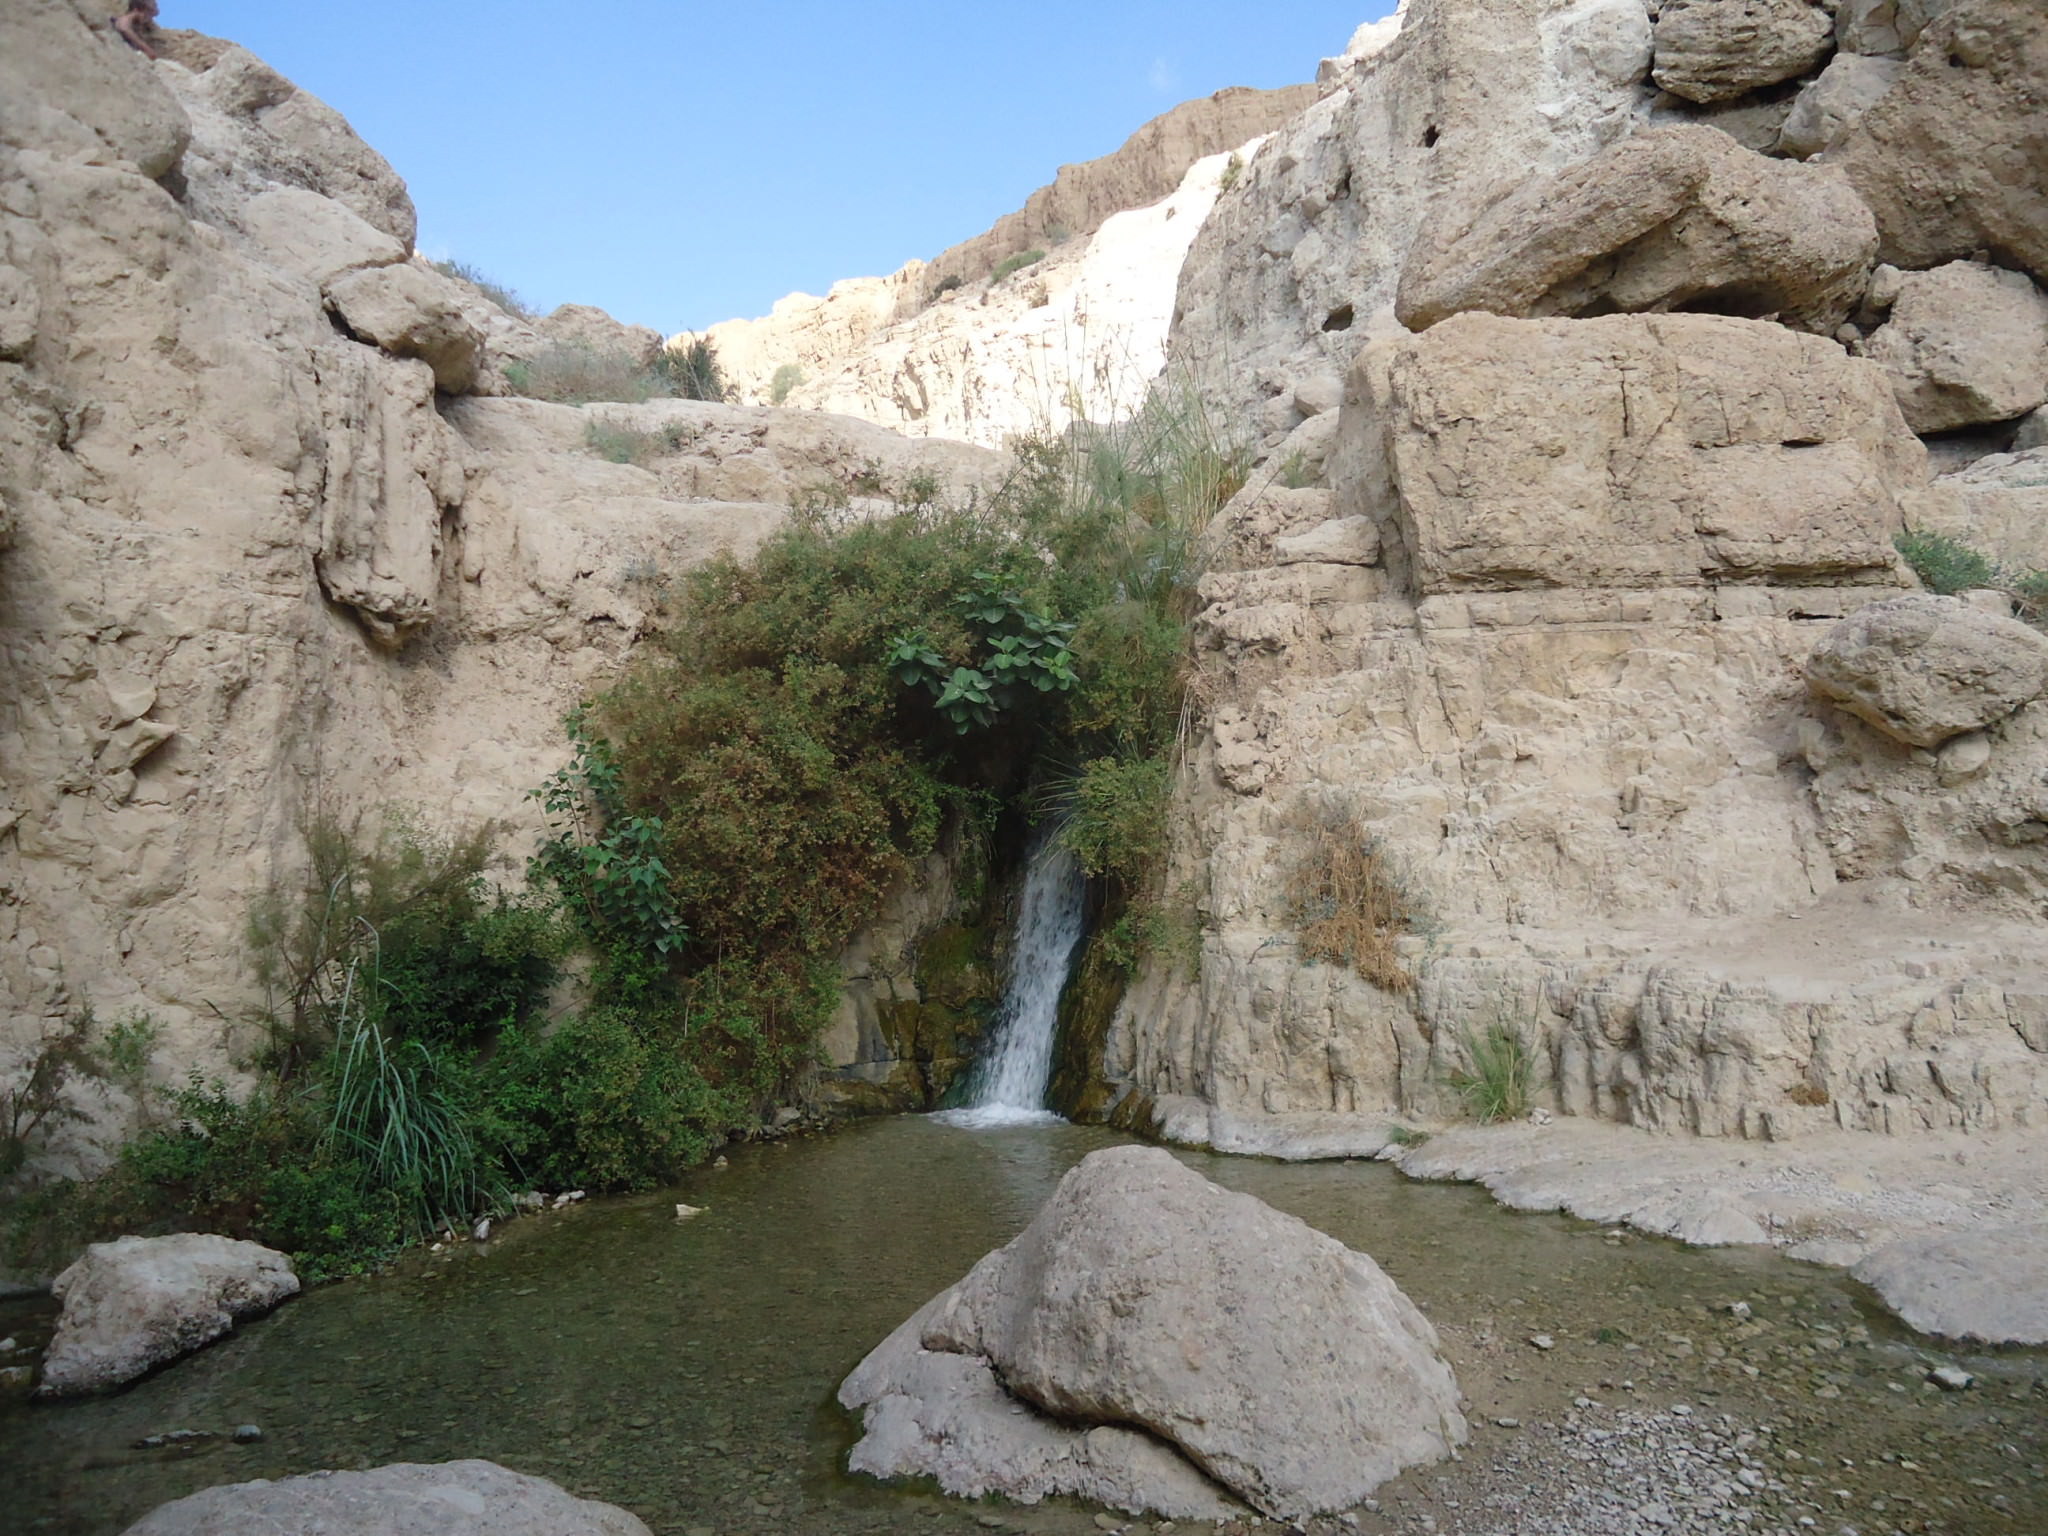 Visiting Ein Gedi: A "Desert Oasis" in Israel